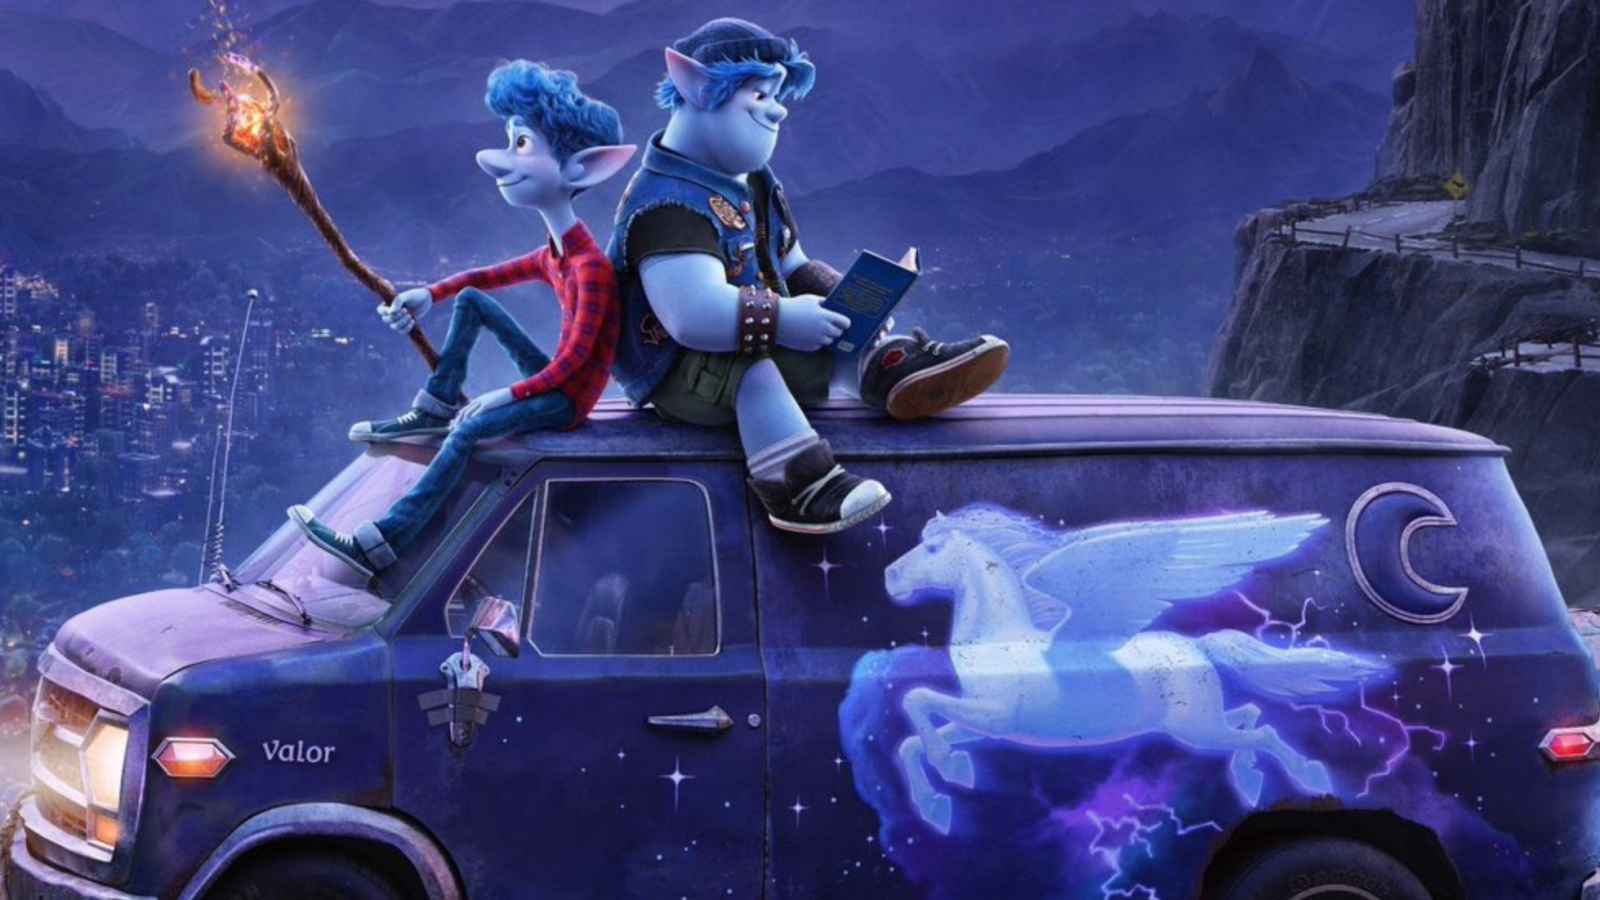 Onward: Pixar needs to get even weirder to maintain its edge